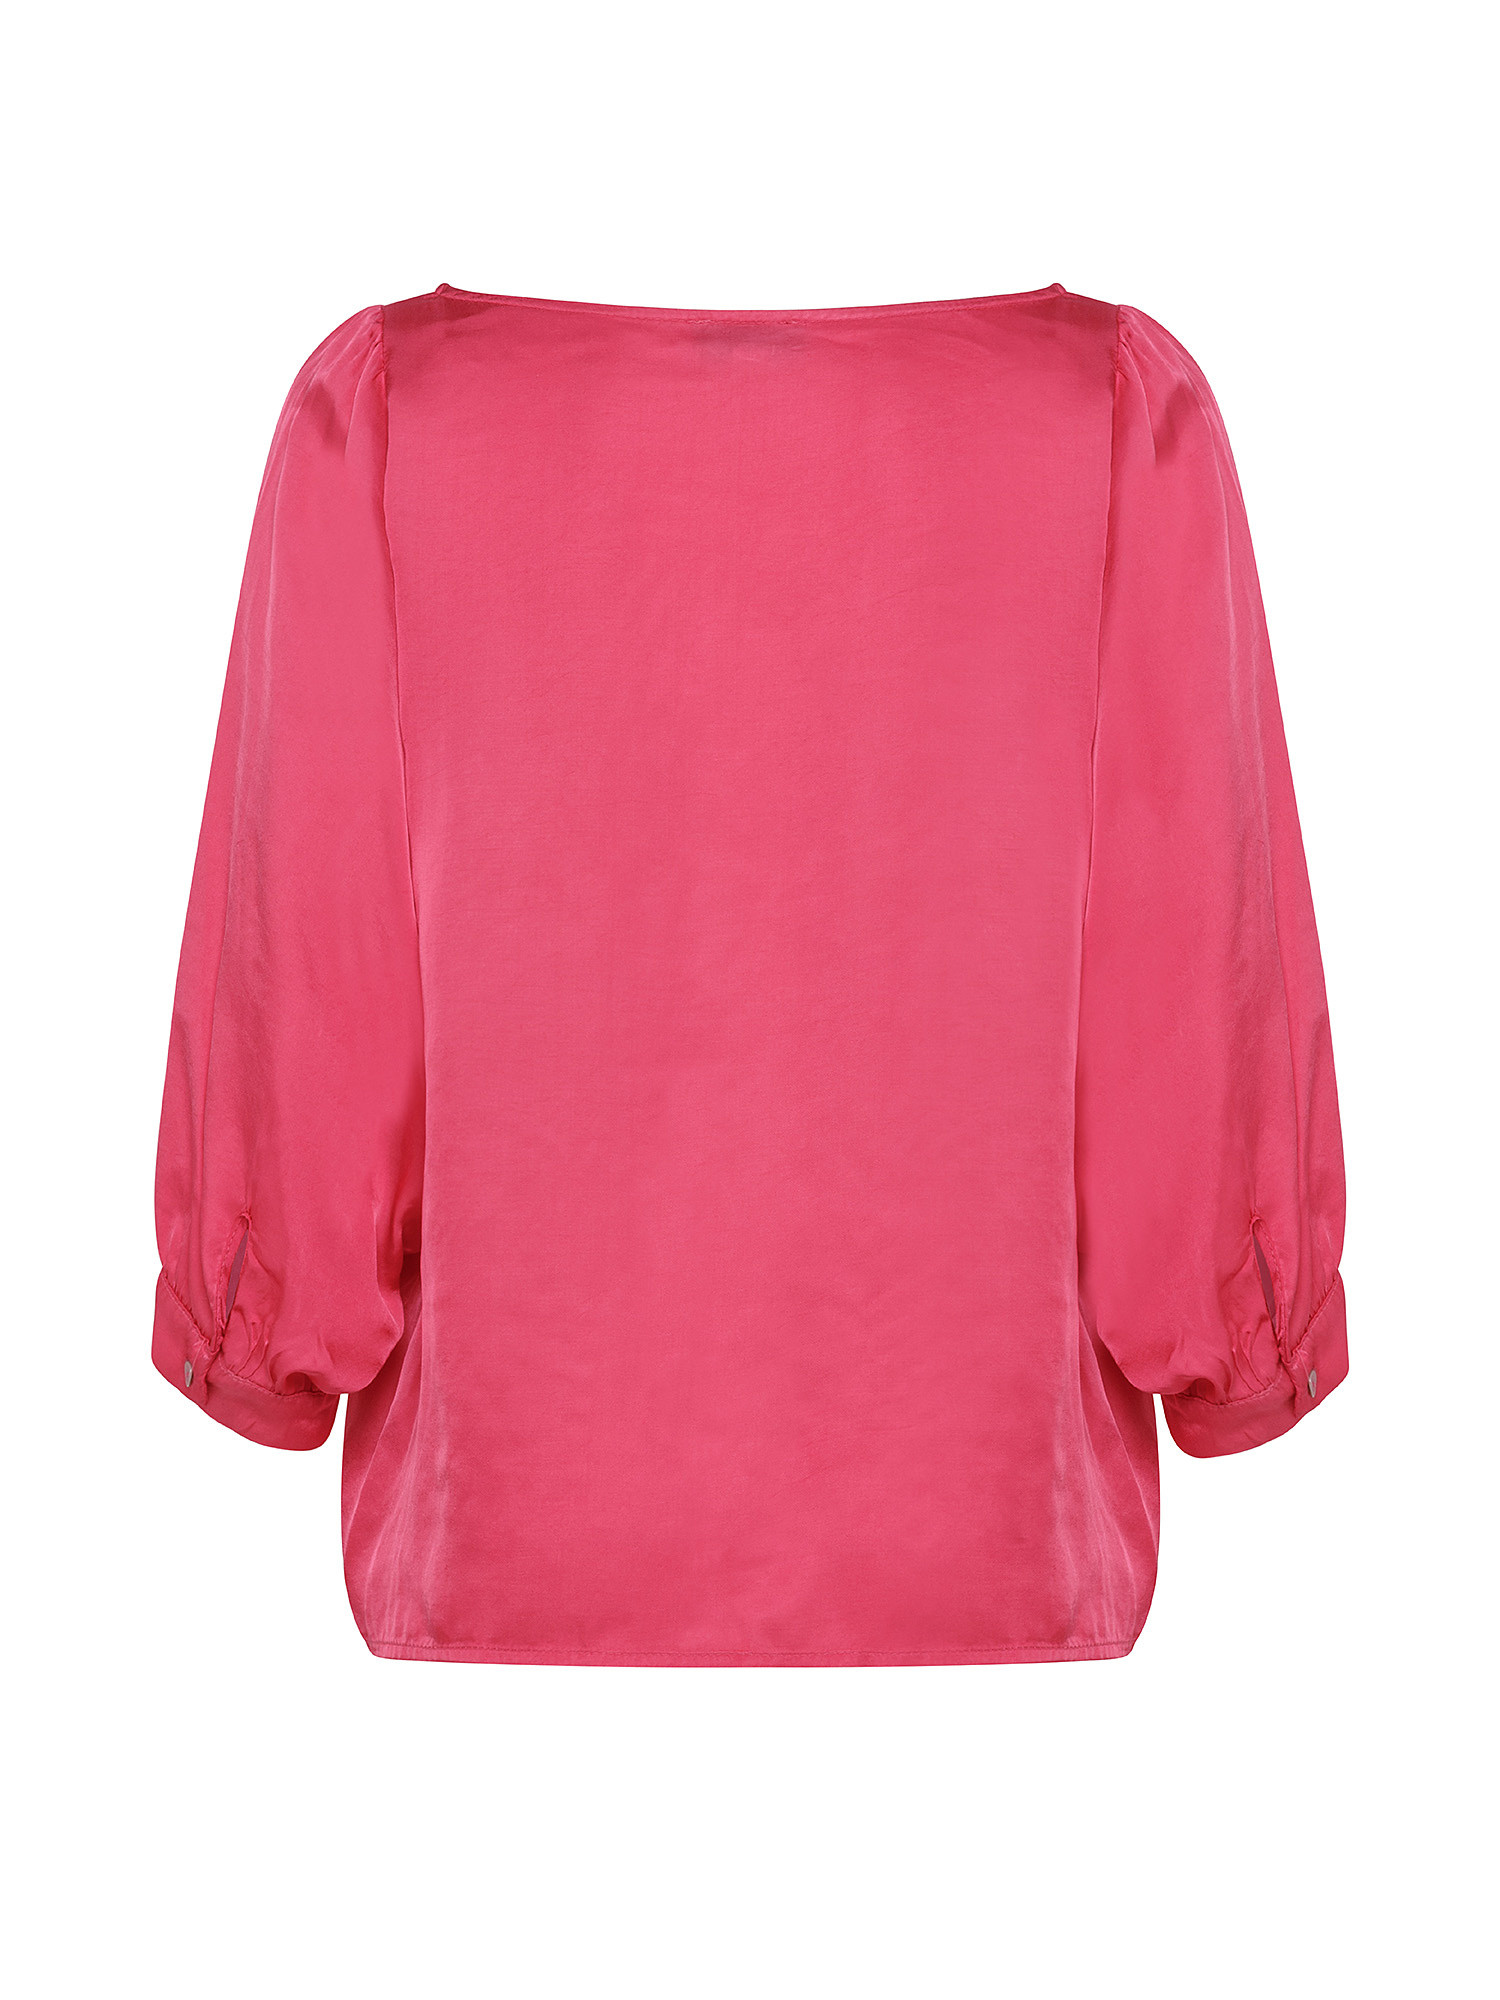 Viscose blouse, Pink Fuchsia, large image number 1